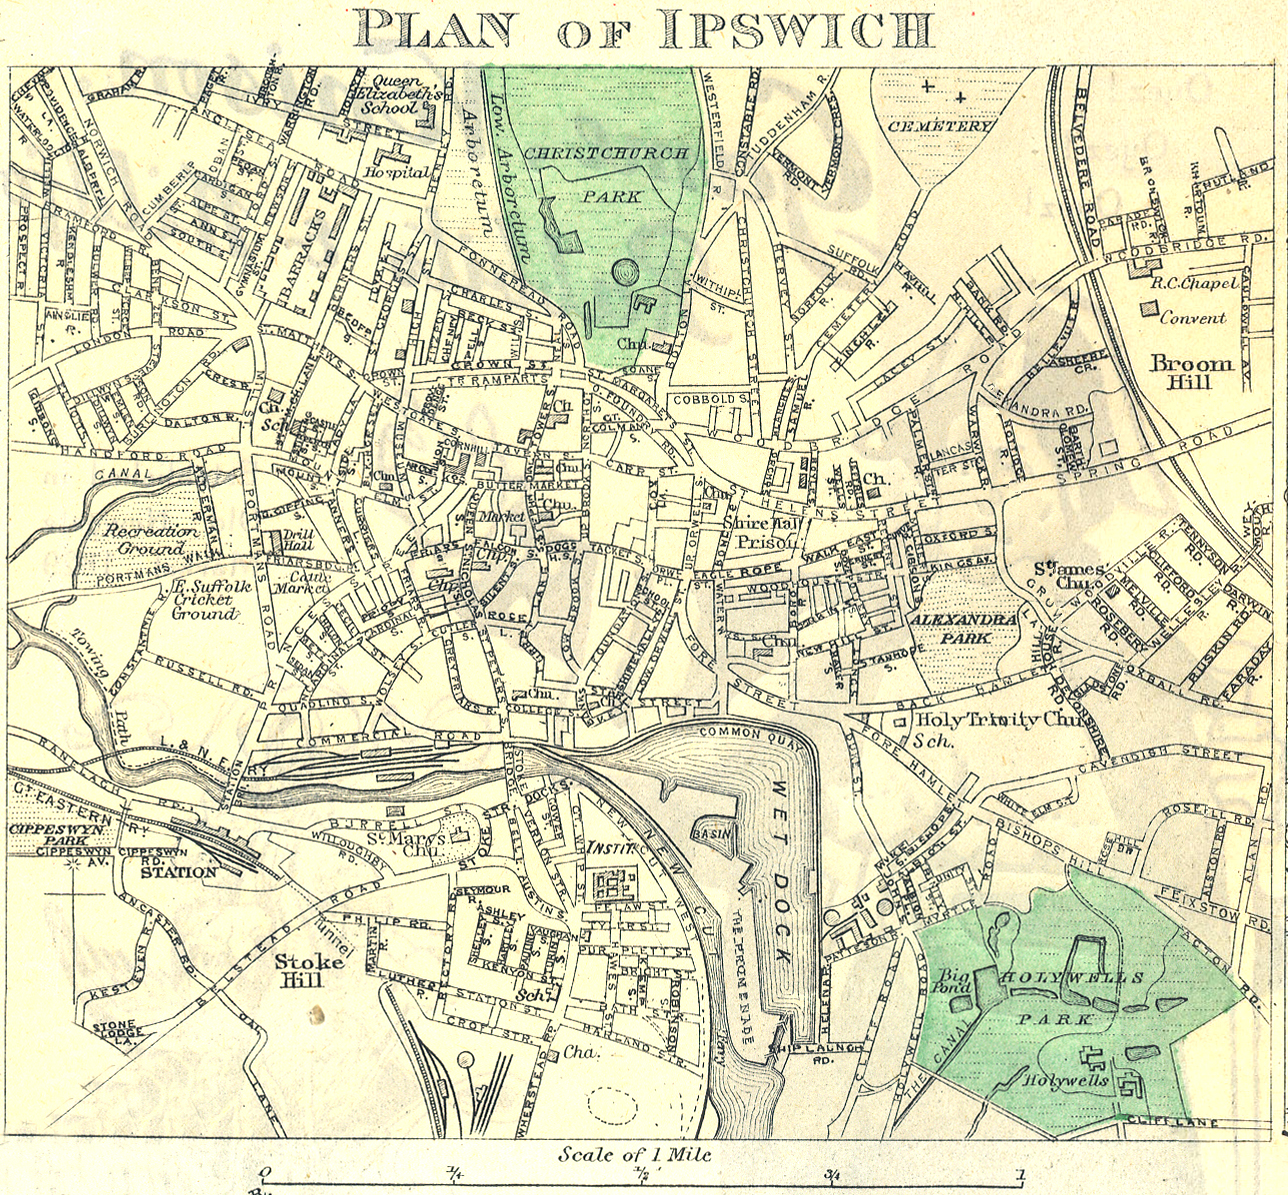 Plan of Ipswich